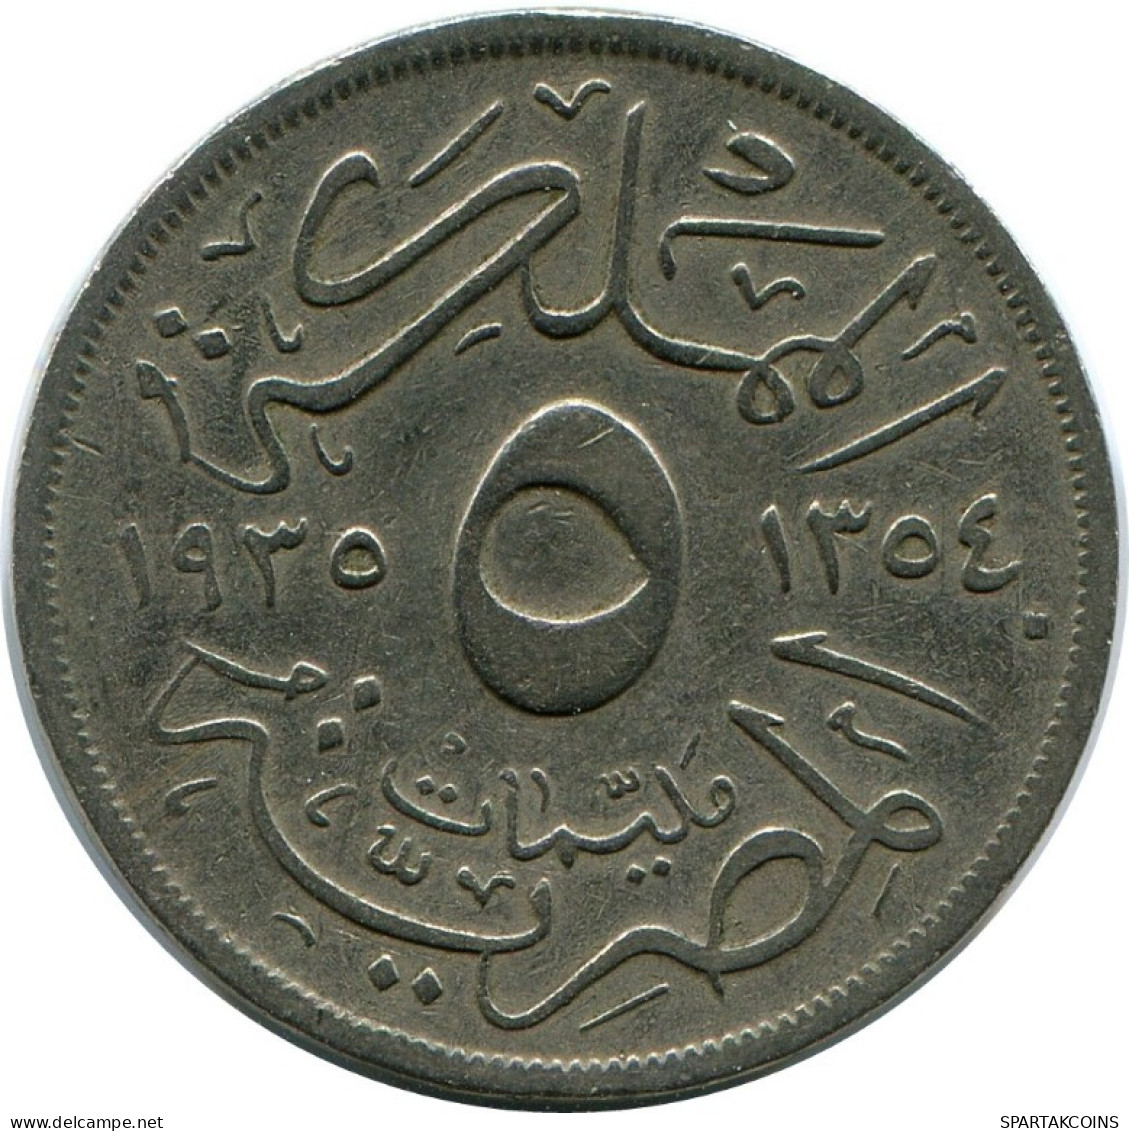 5 MILLIEMES 1935 EGIPTO EGYPT Islámico Moneda #AH666.3.E.A - Egypte